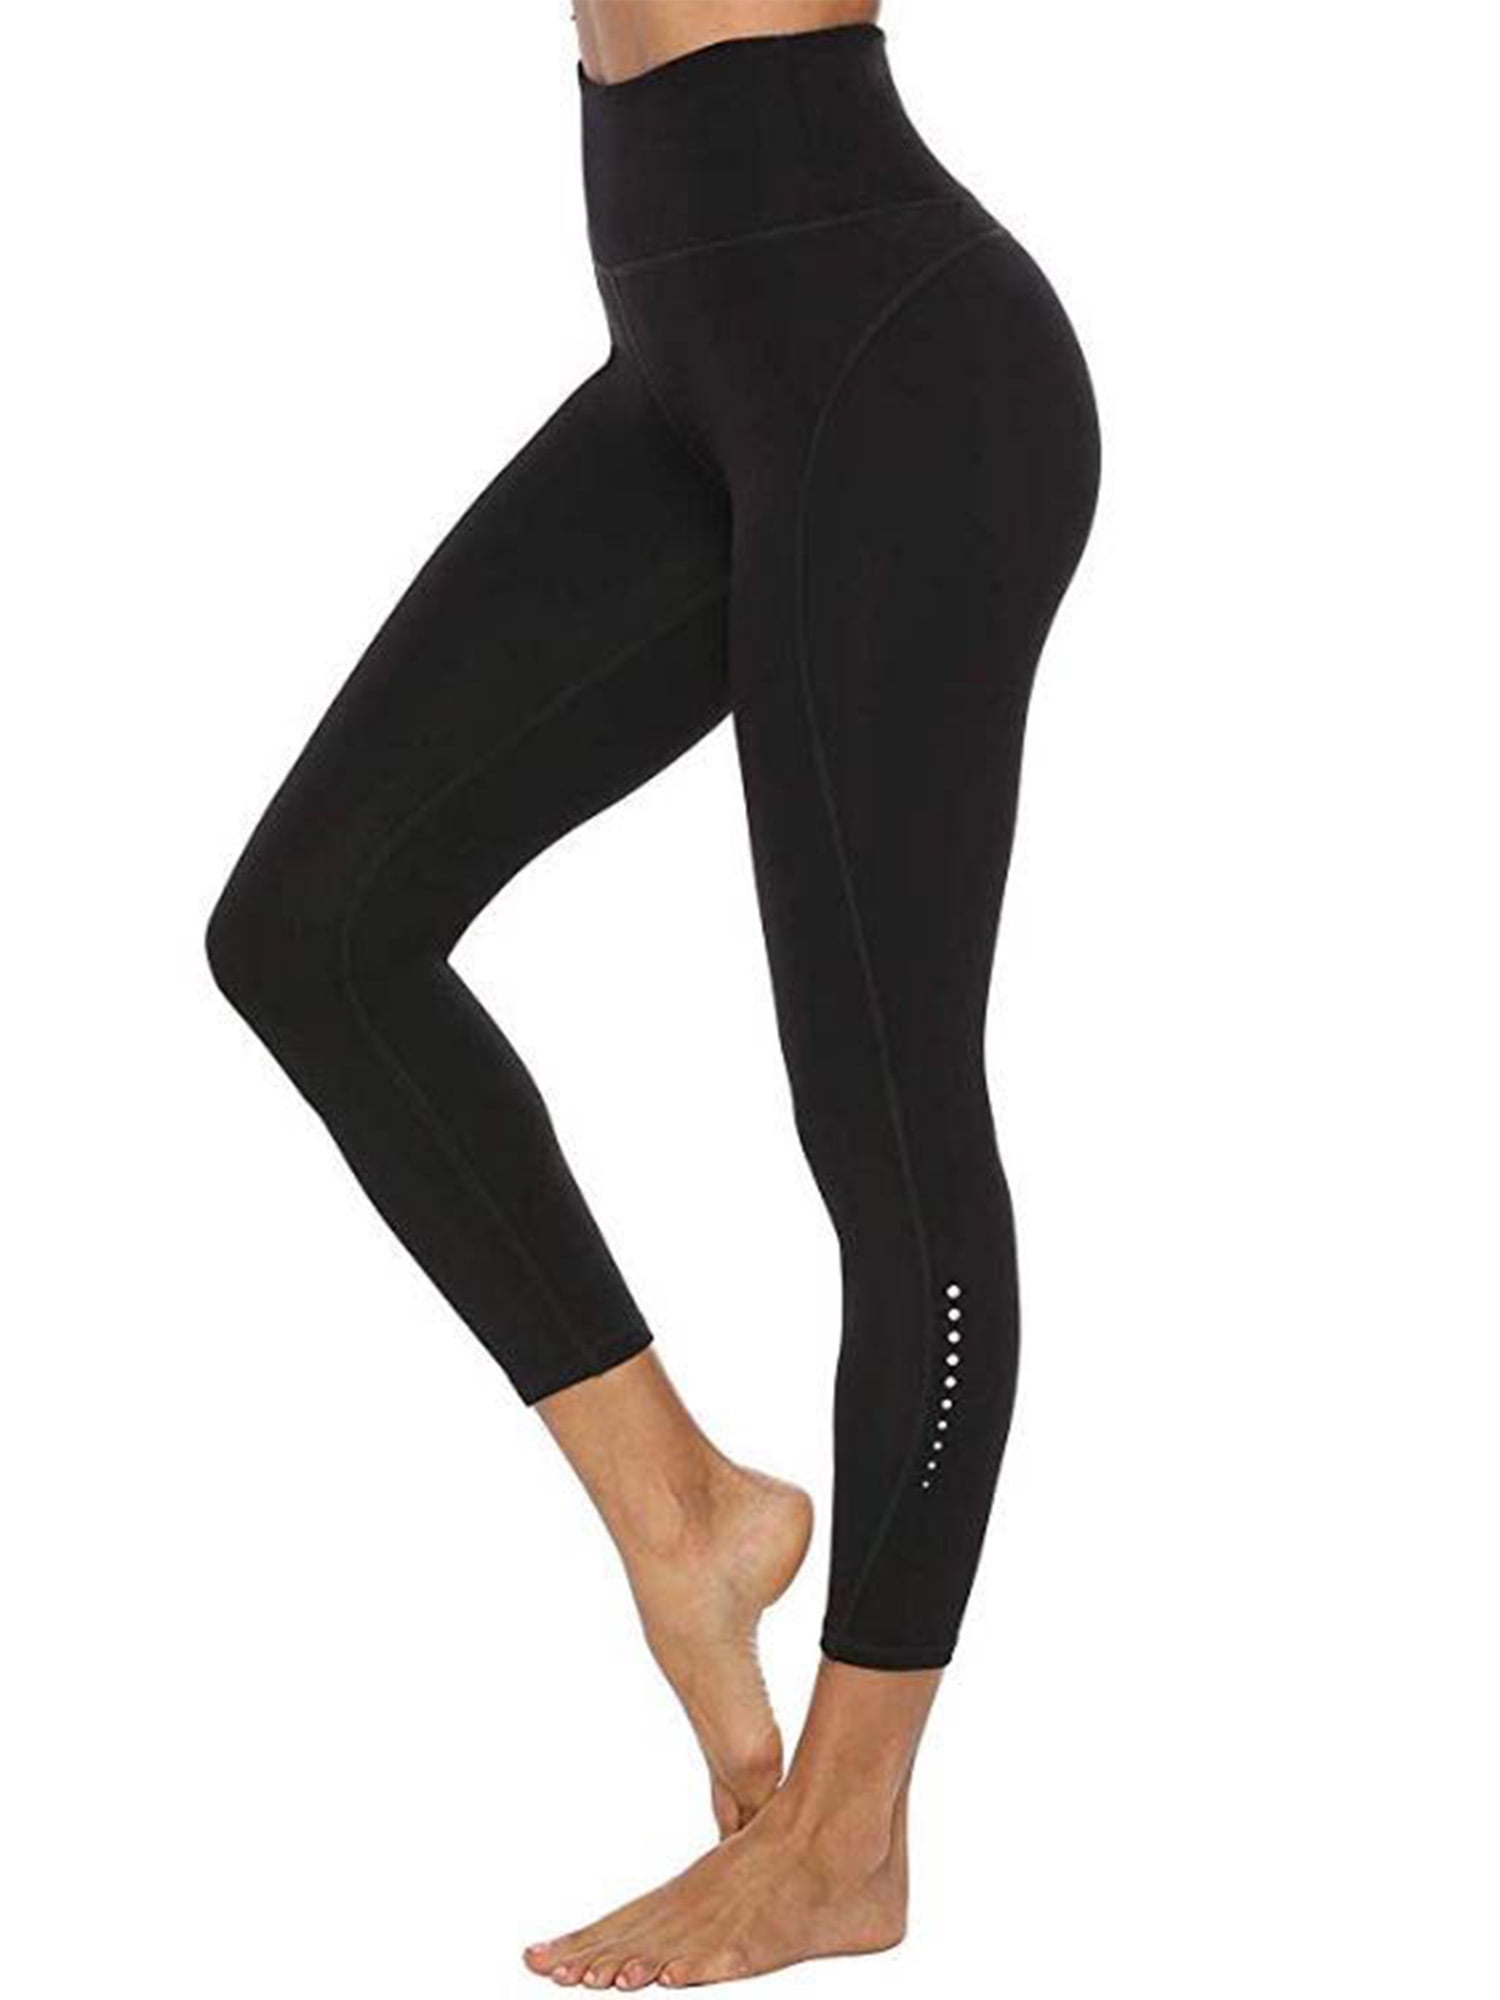 Tsmile Women High Waist Tummy Control Yoga Pocket Shorts Stretchy Quick Dry Training Running Athletic Pants 